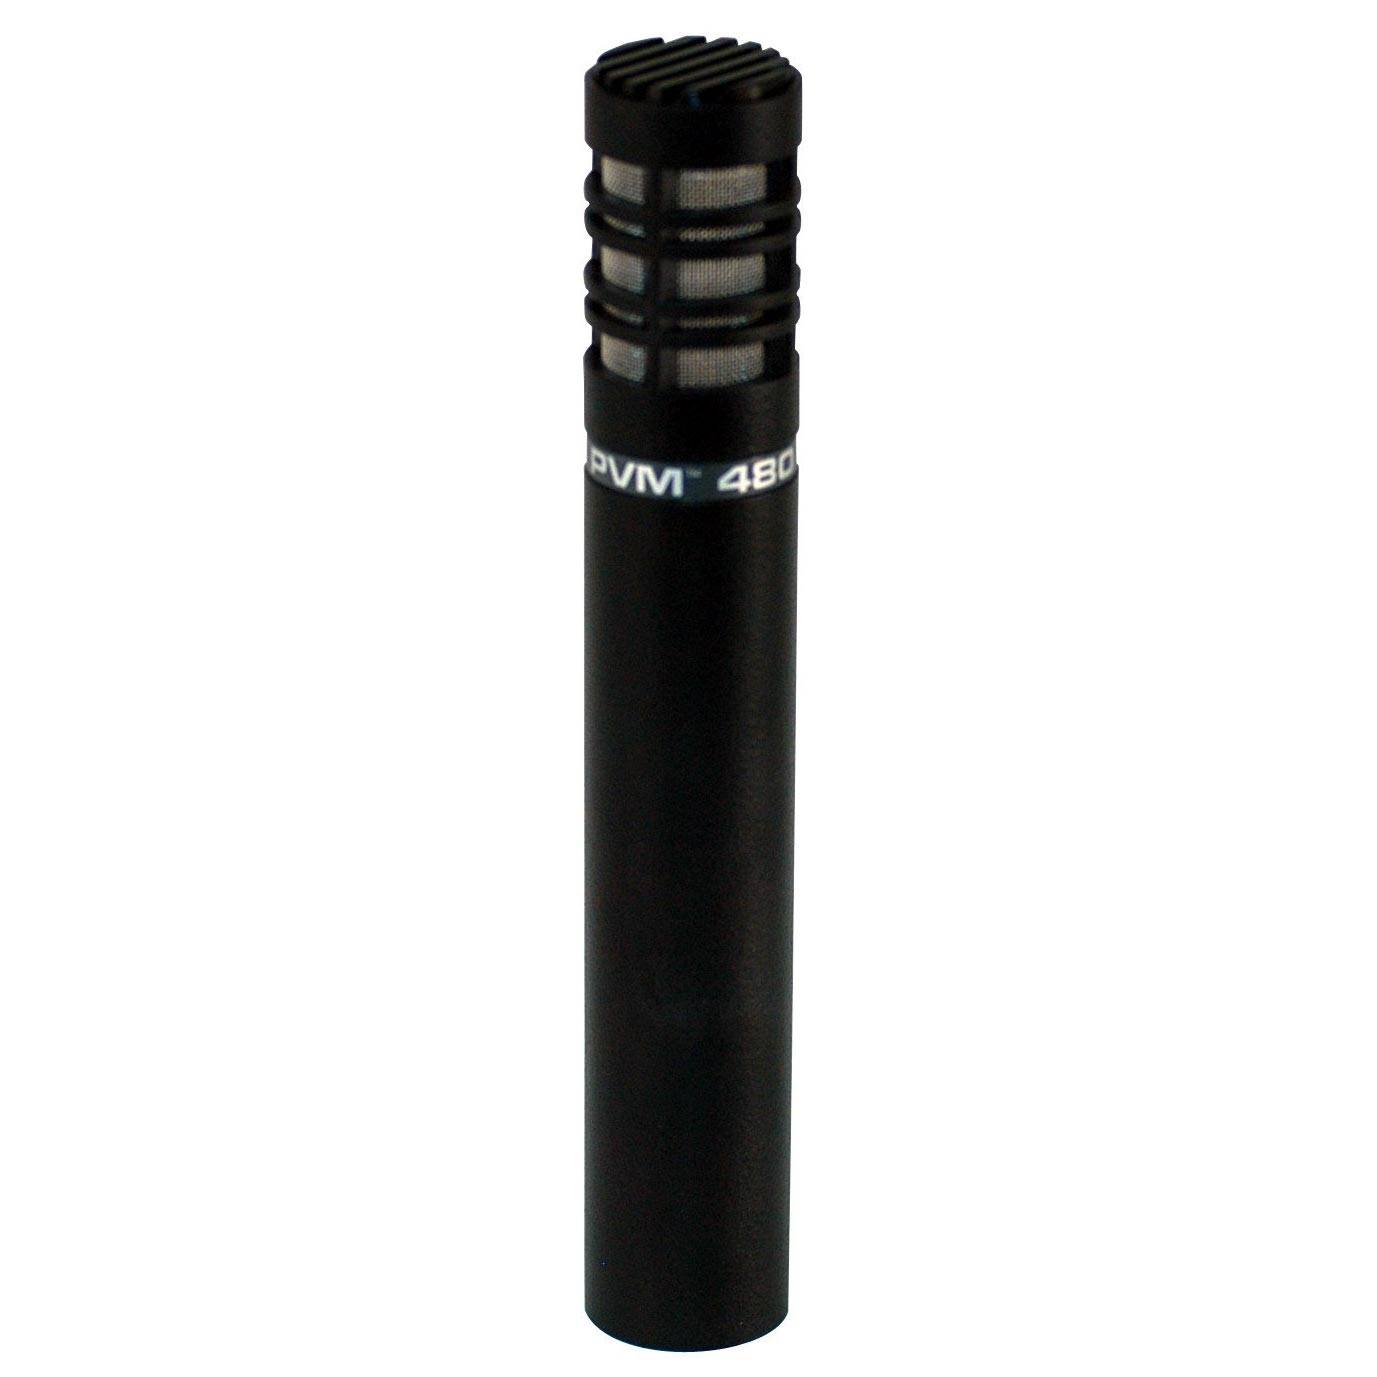 PEAVEY PVM 480 Hypercardioid Black Condenser Microphone